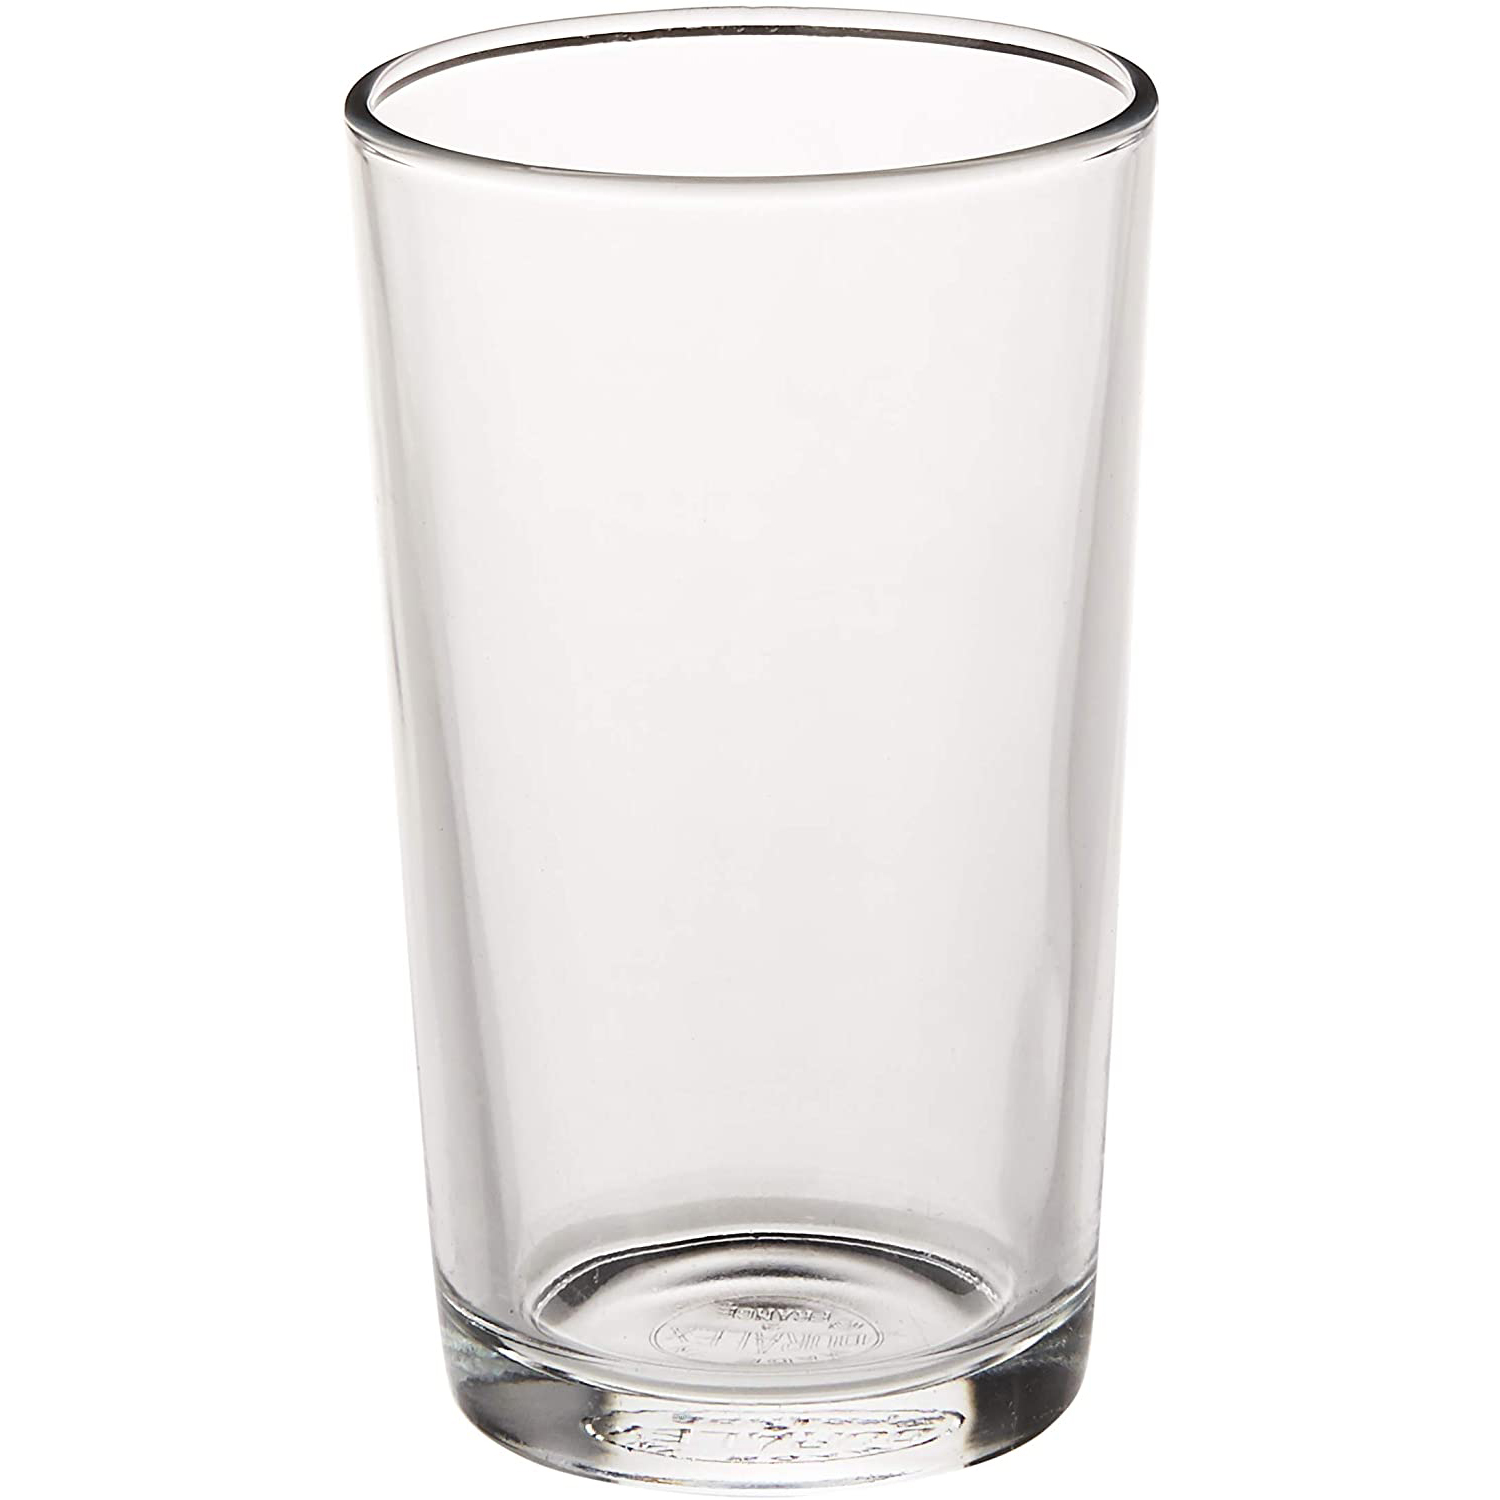 Duralex Unie 7 Ounce Clear Glass Drinkware Tumbler Drinking Glasses